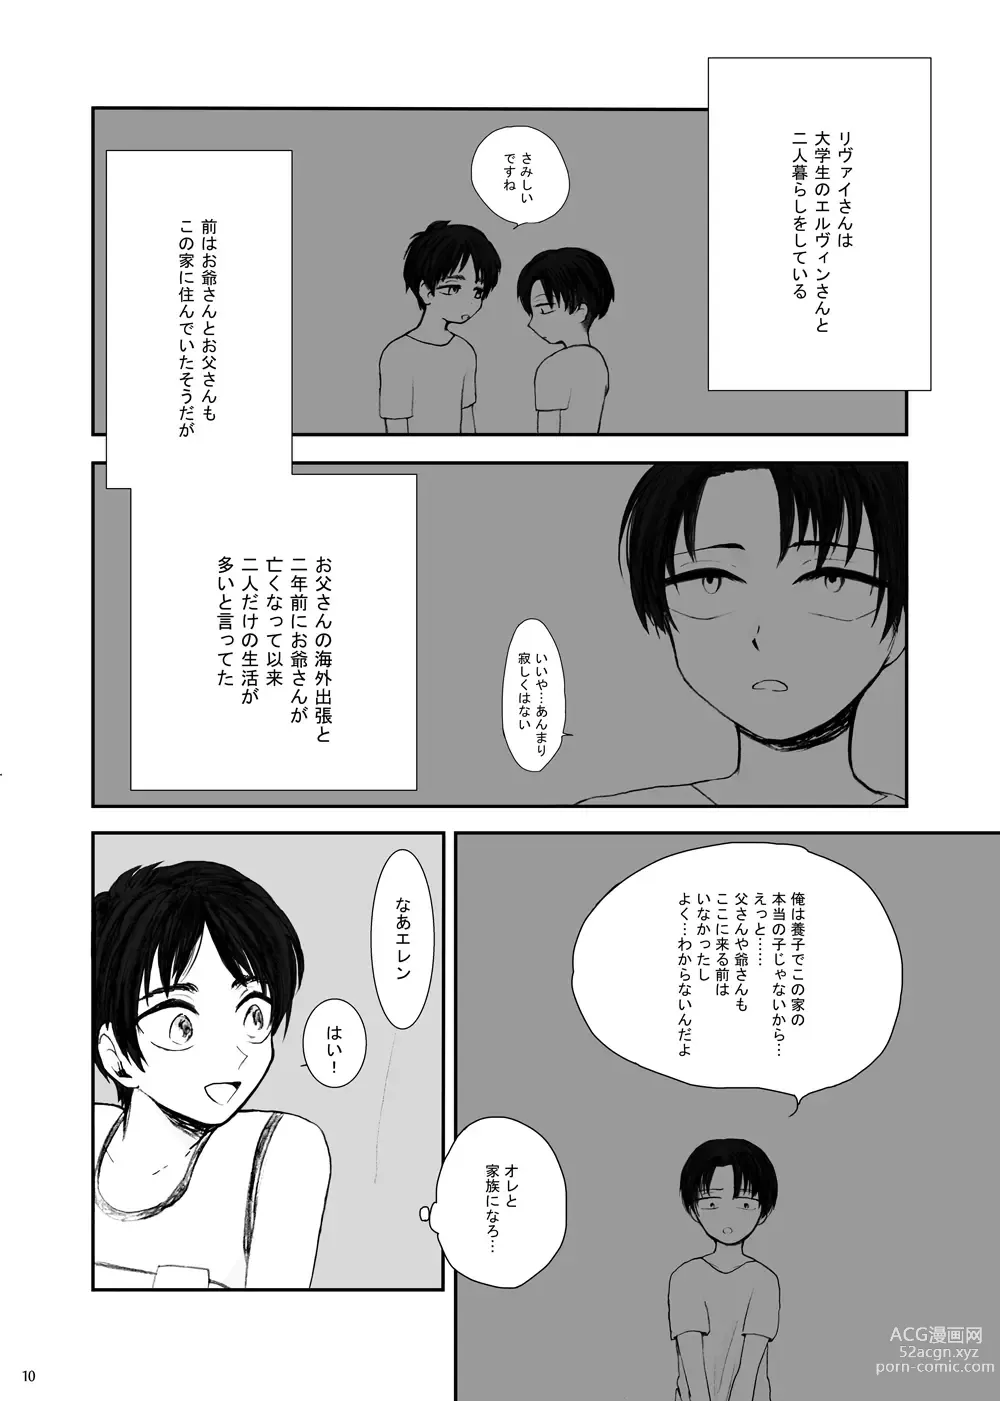 Page 6 of doujinshi Hizumi